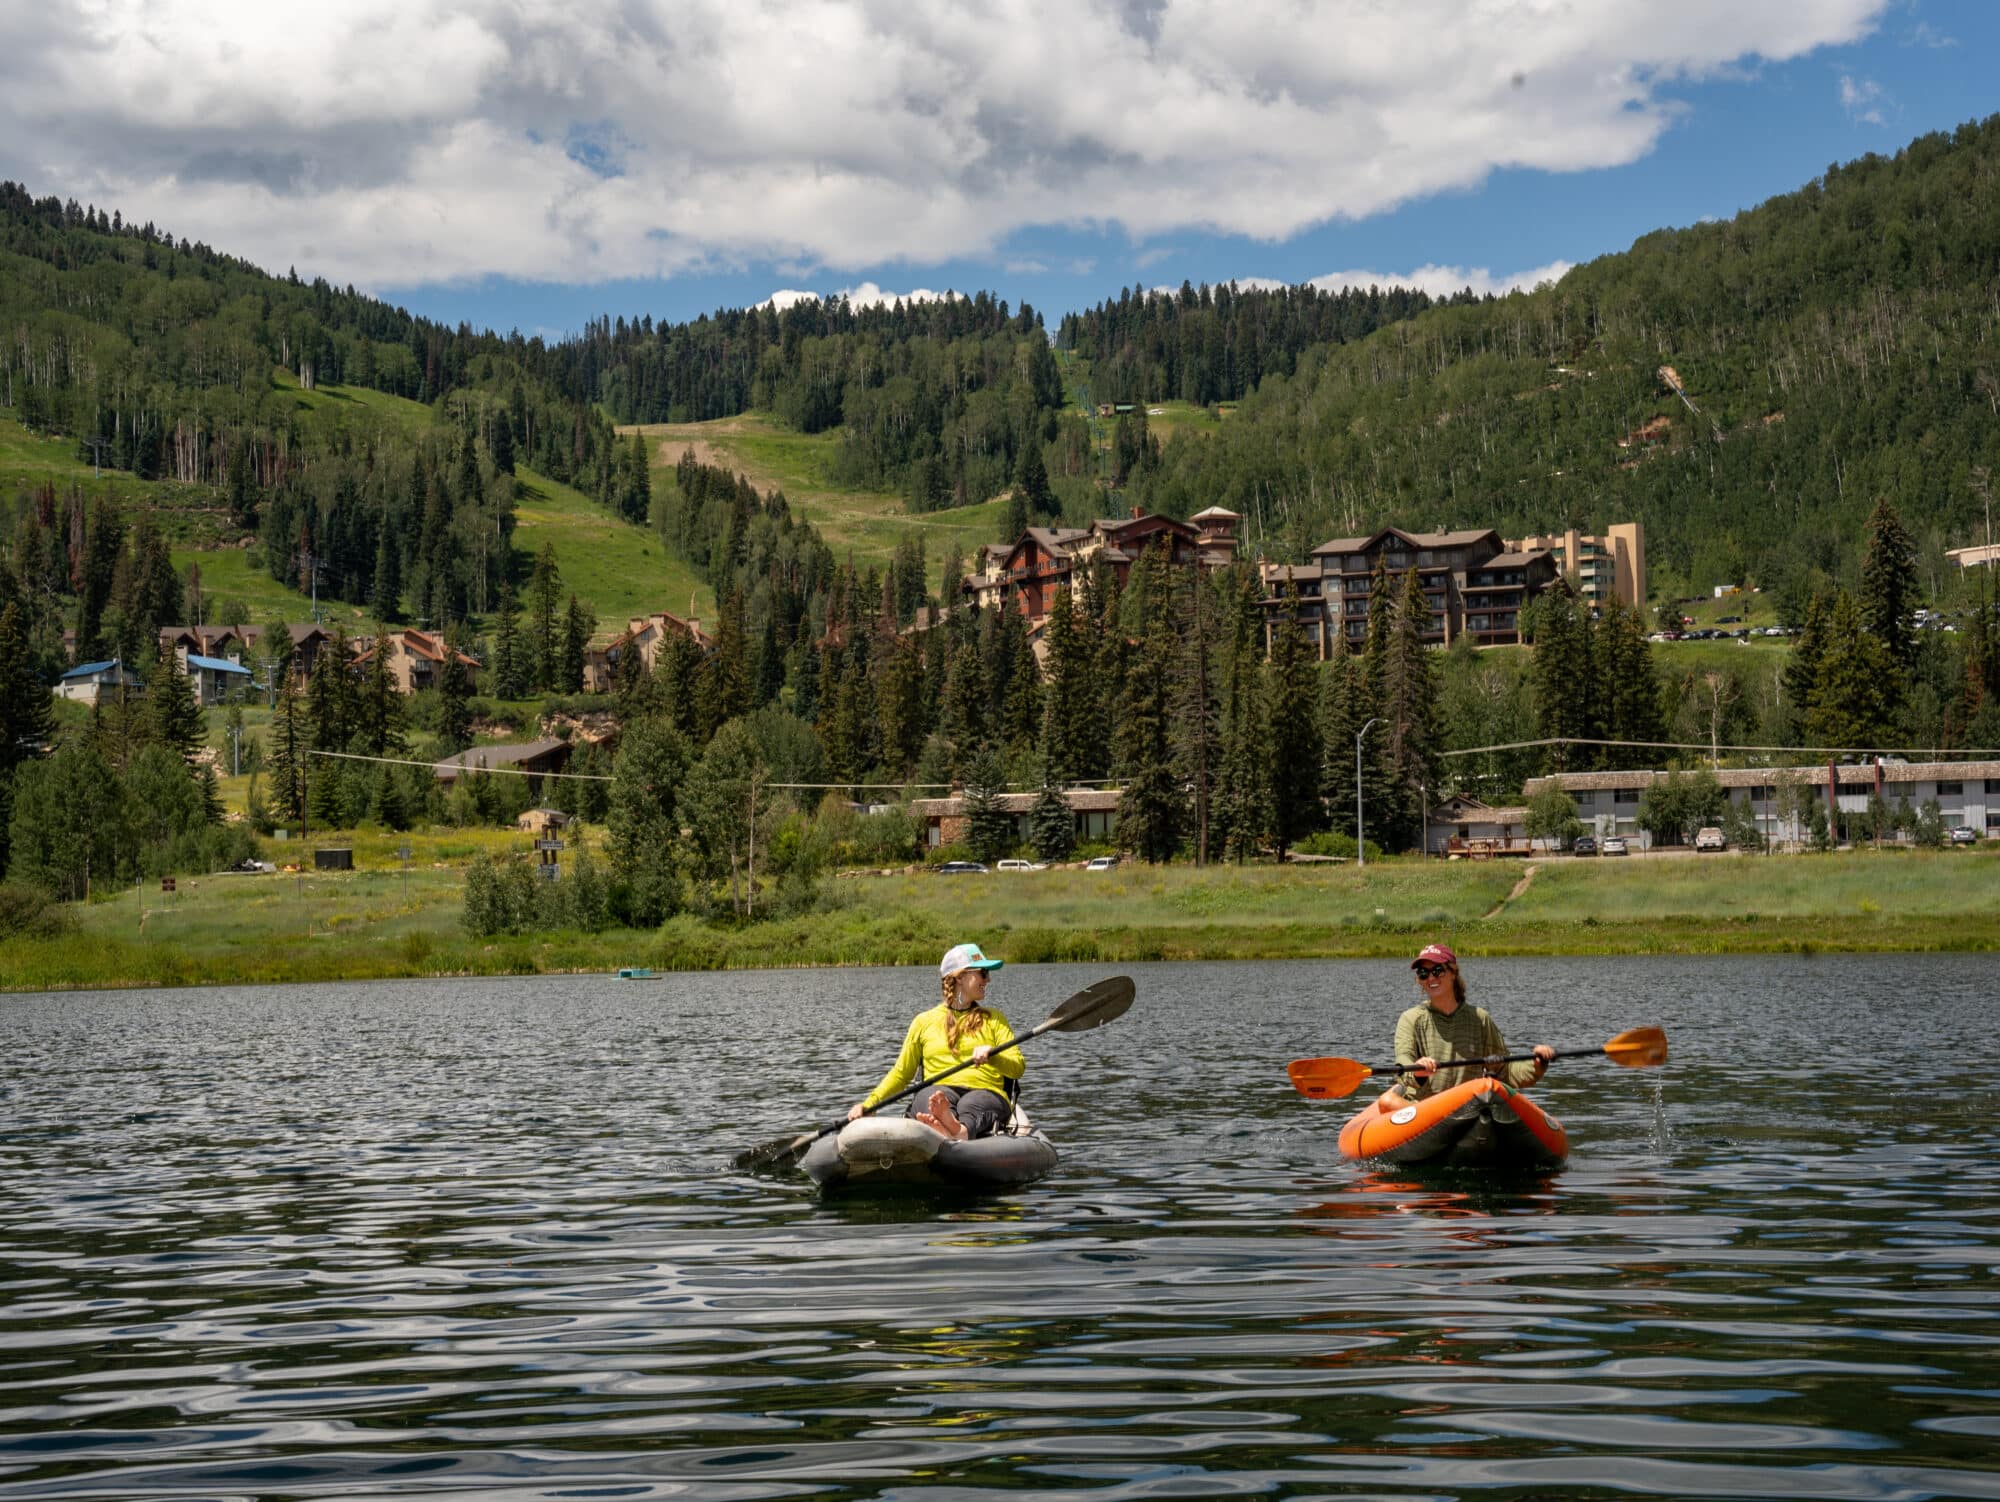 Paddling around Twilight Lake on inflatable kayaks